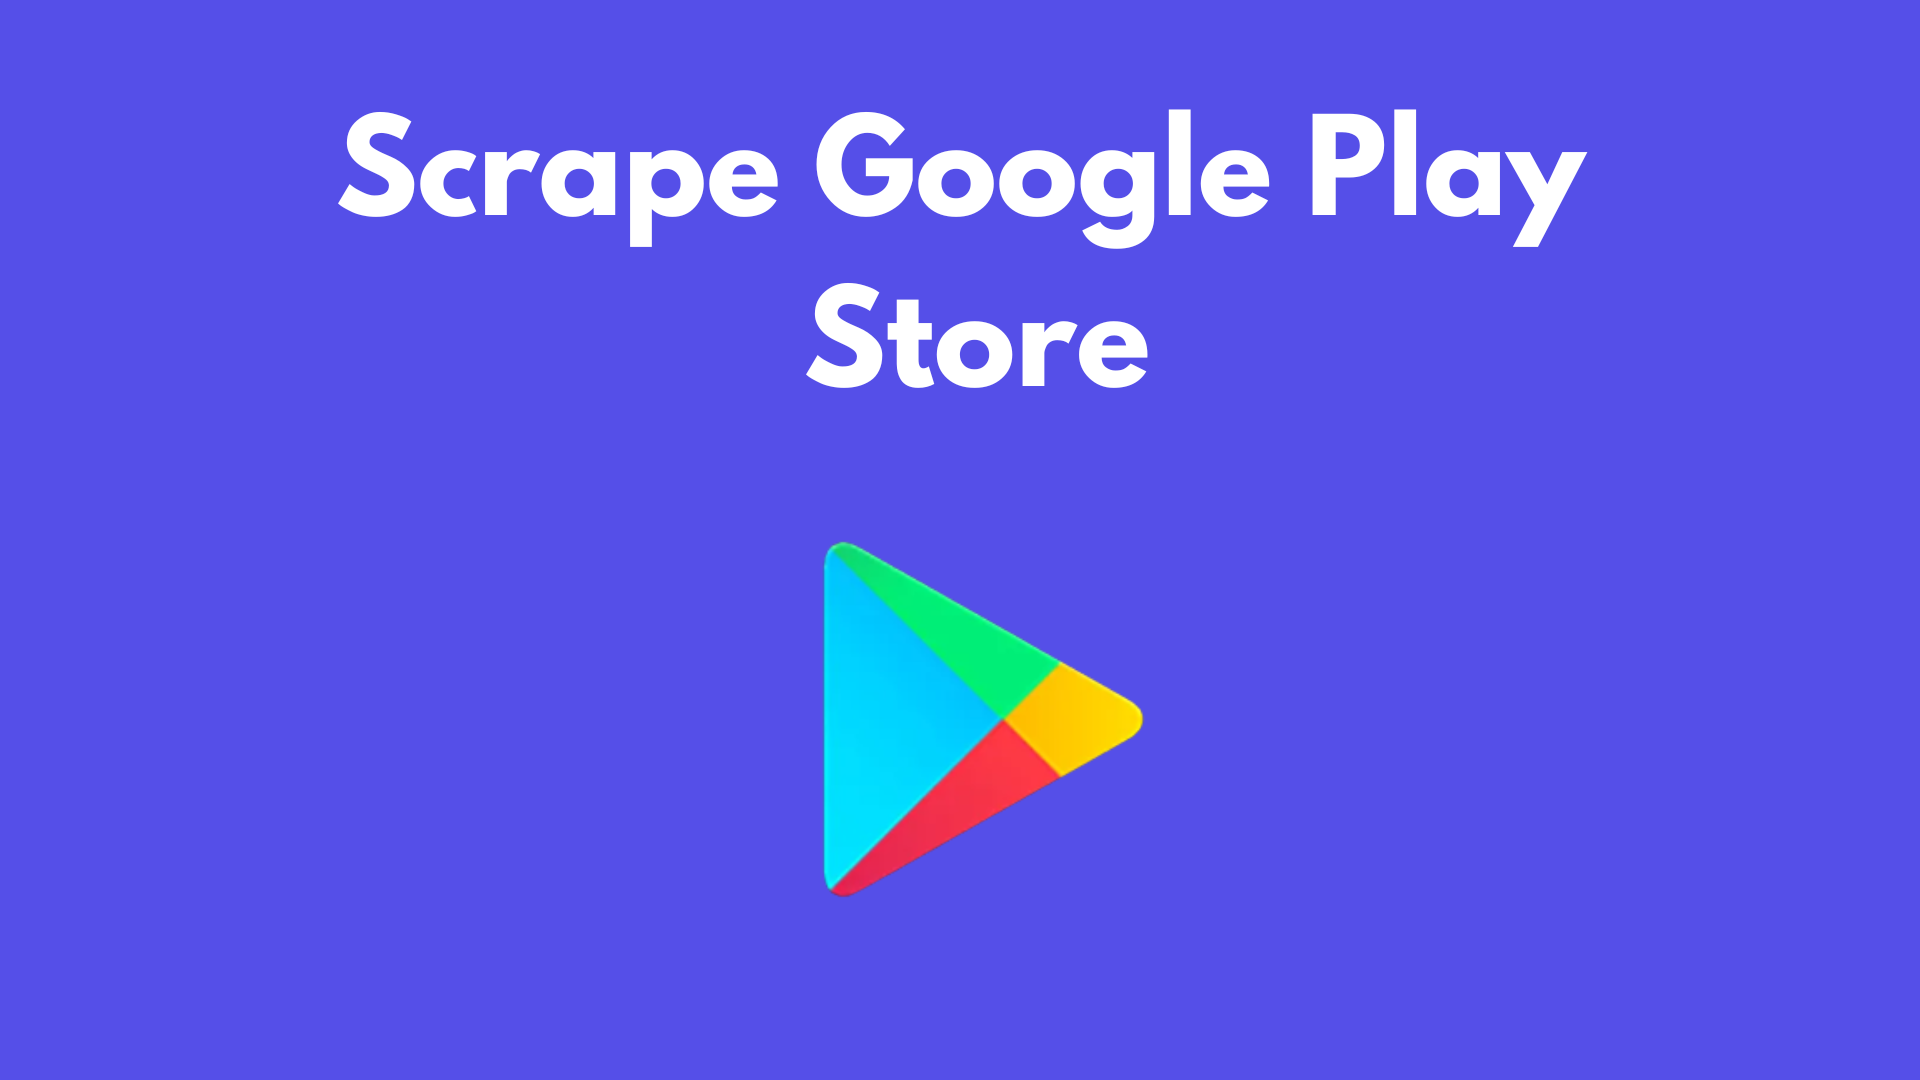 Scrape Google Play Store